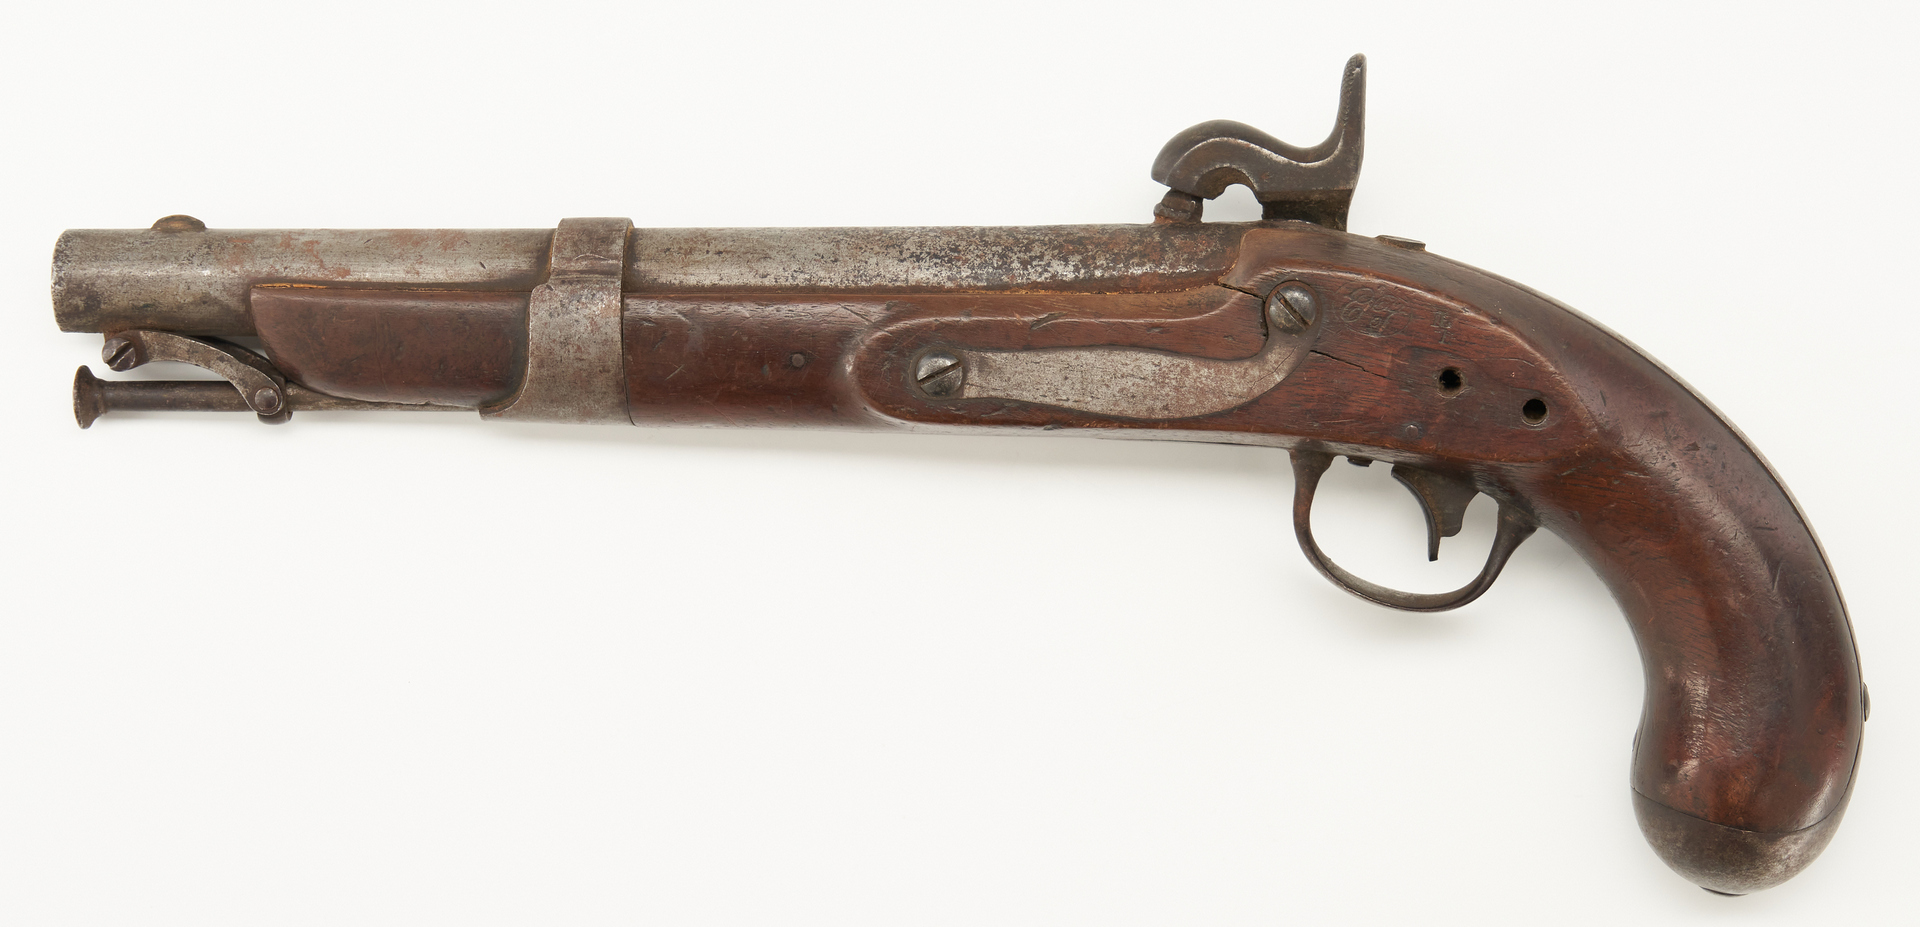 Lot 696: Simeon North U.S. Model 1826 Flintlock Pistol